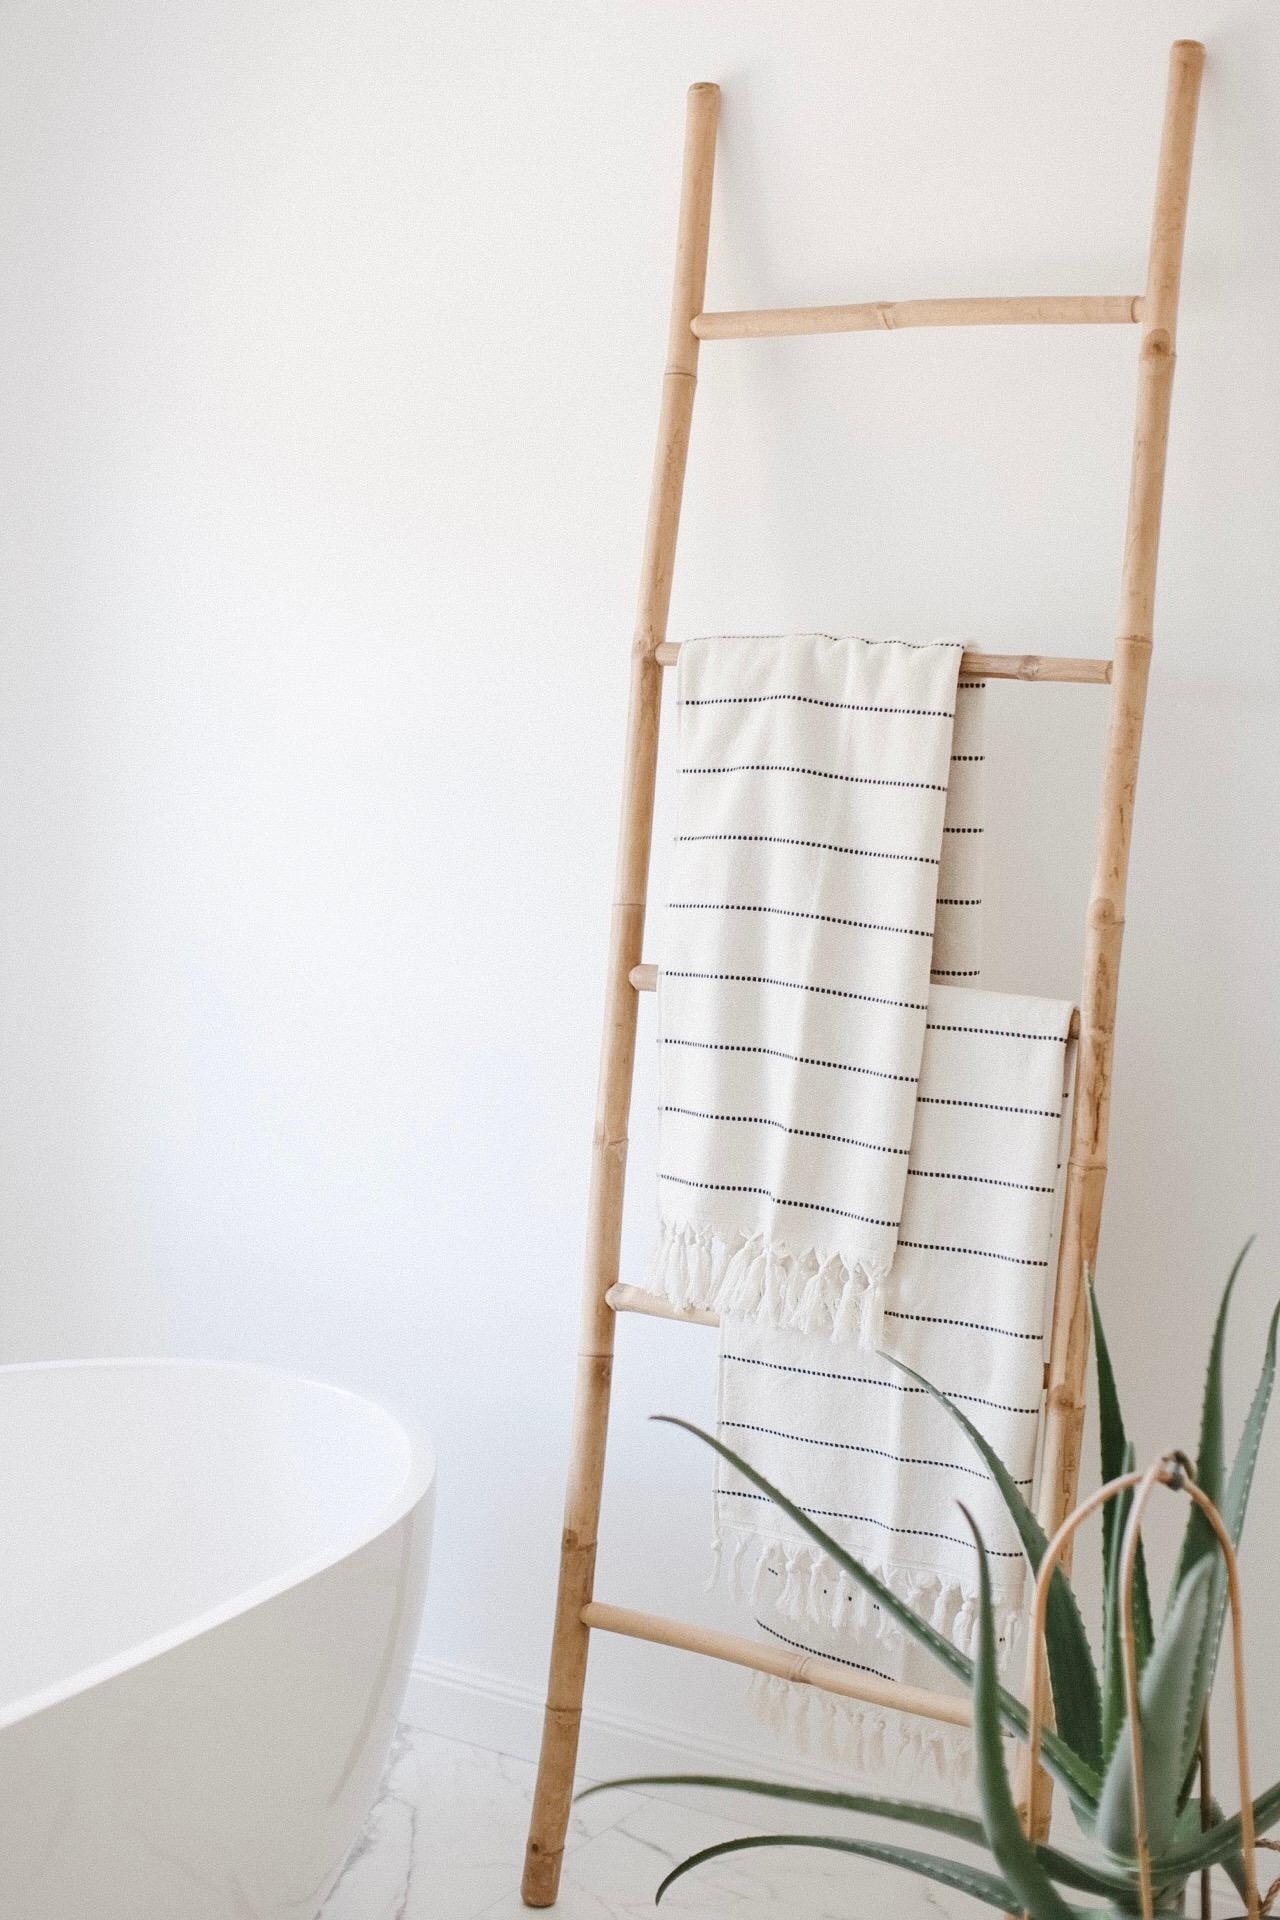 Badezimmer-Styling 🛁
#bathroom #badezimmerstyling #bambusleiter 